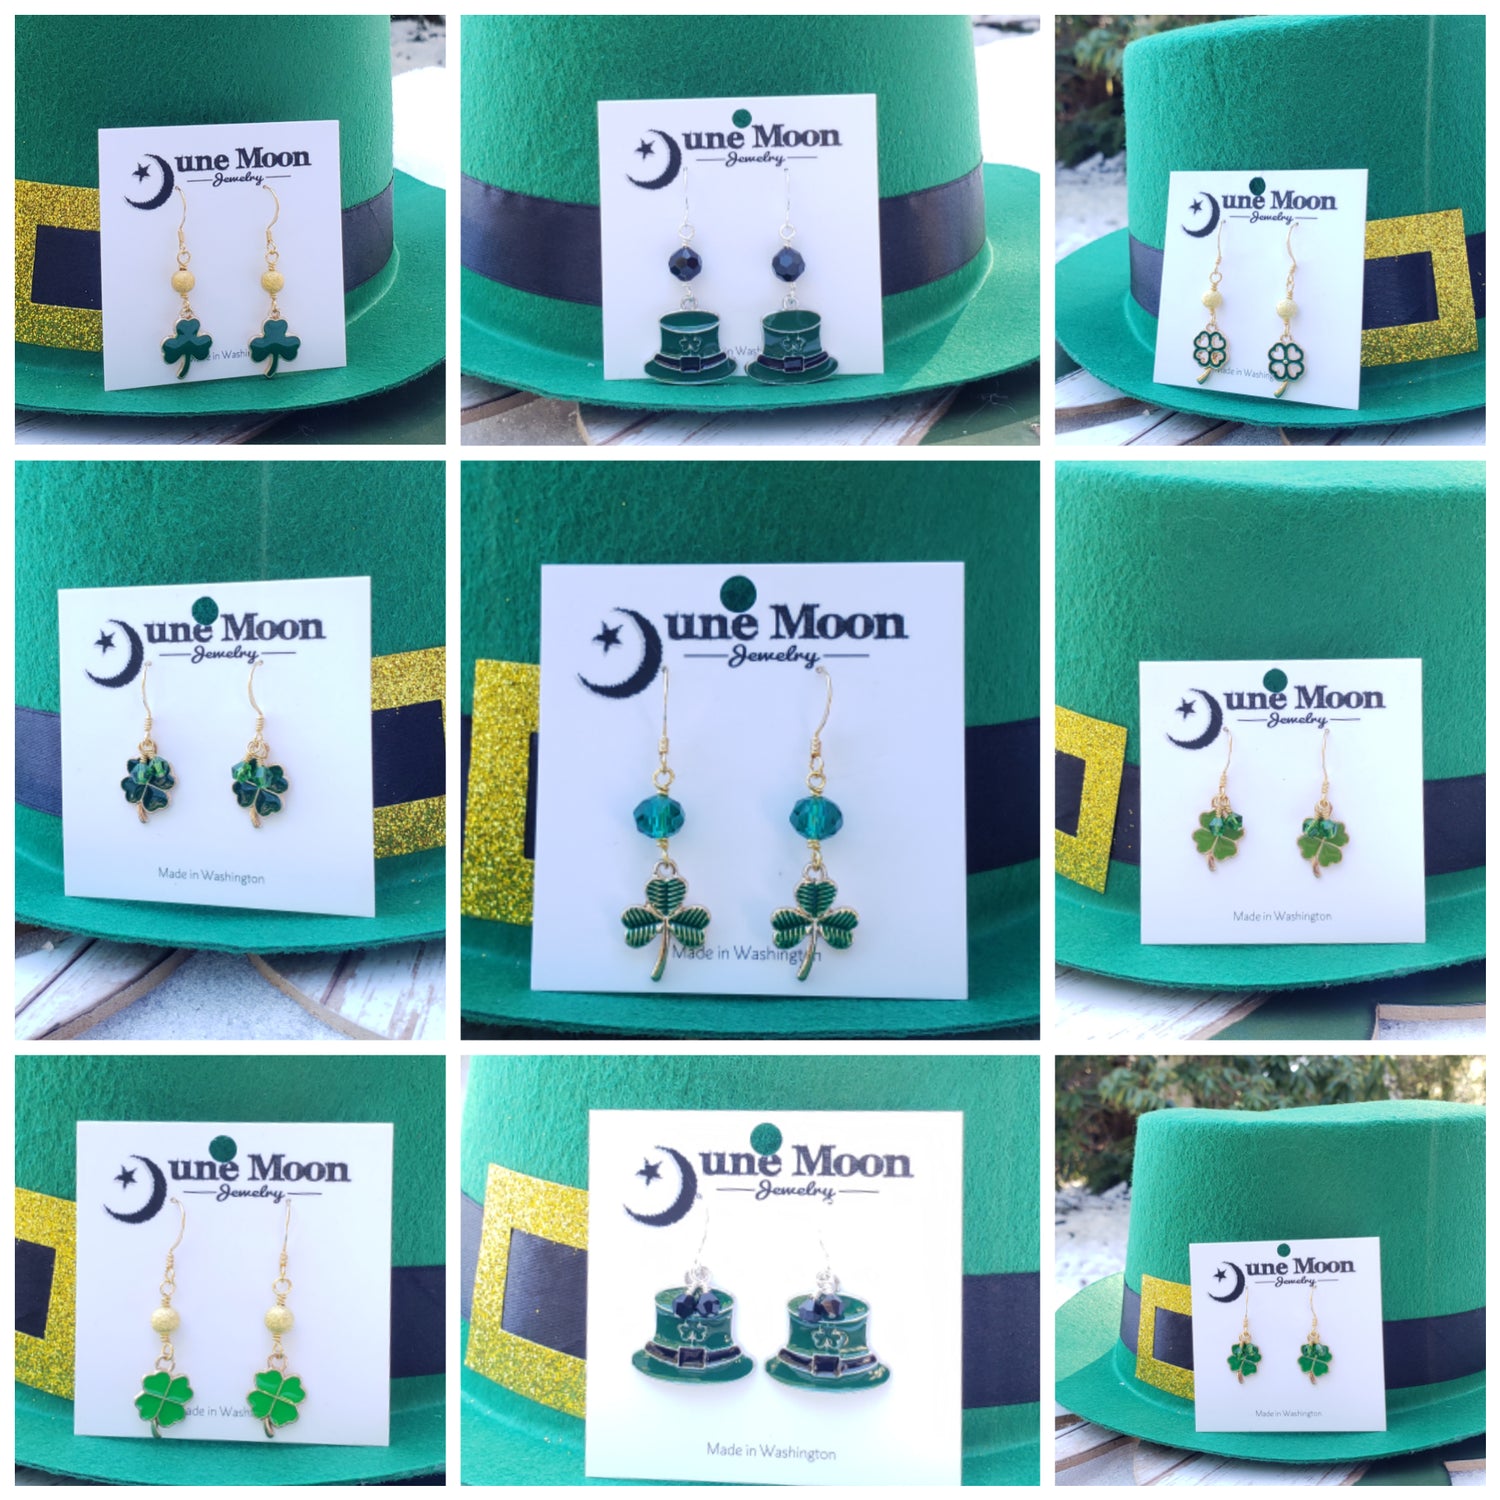 St. Patrick's Day Earrings